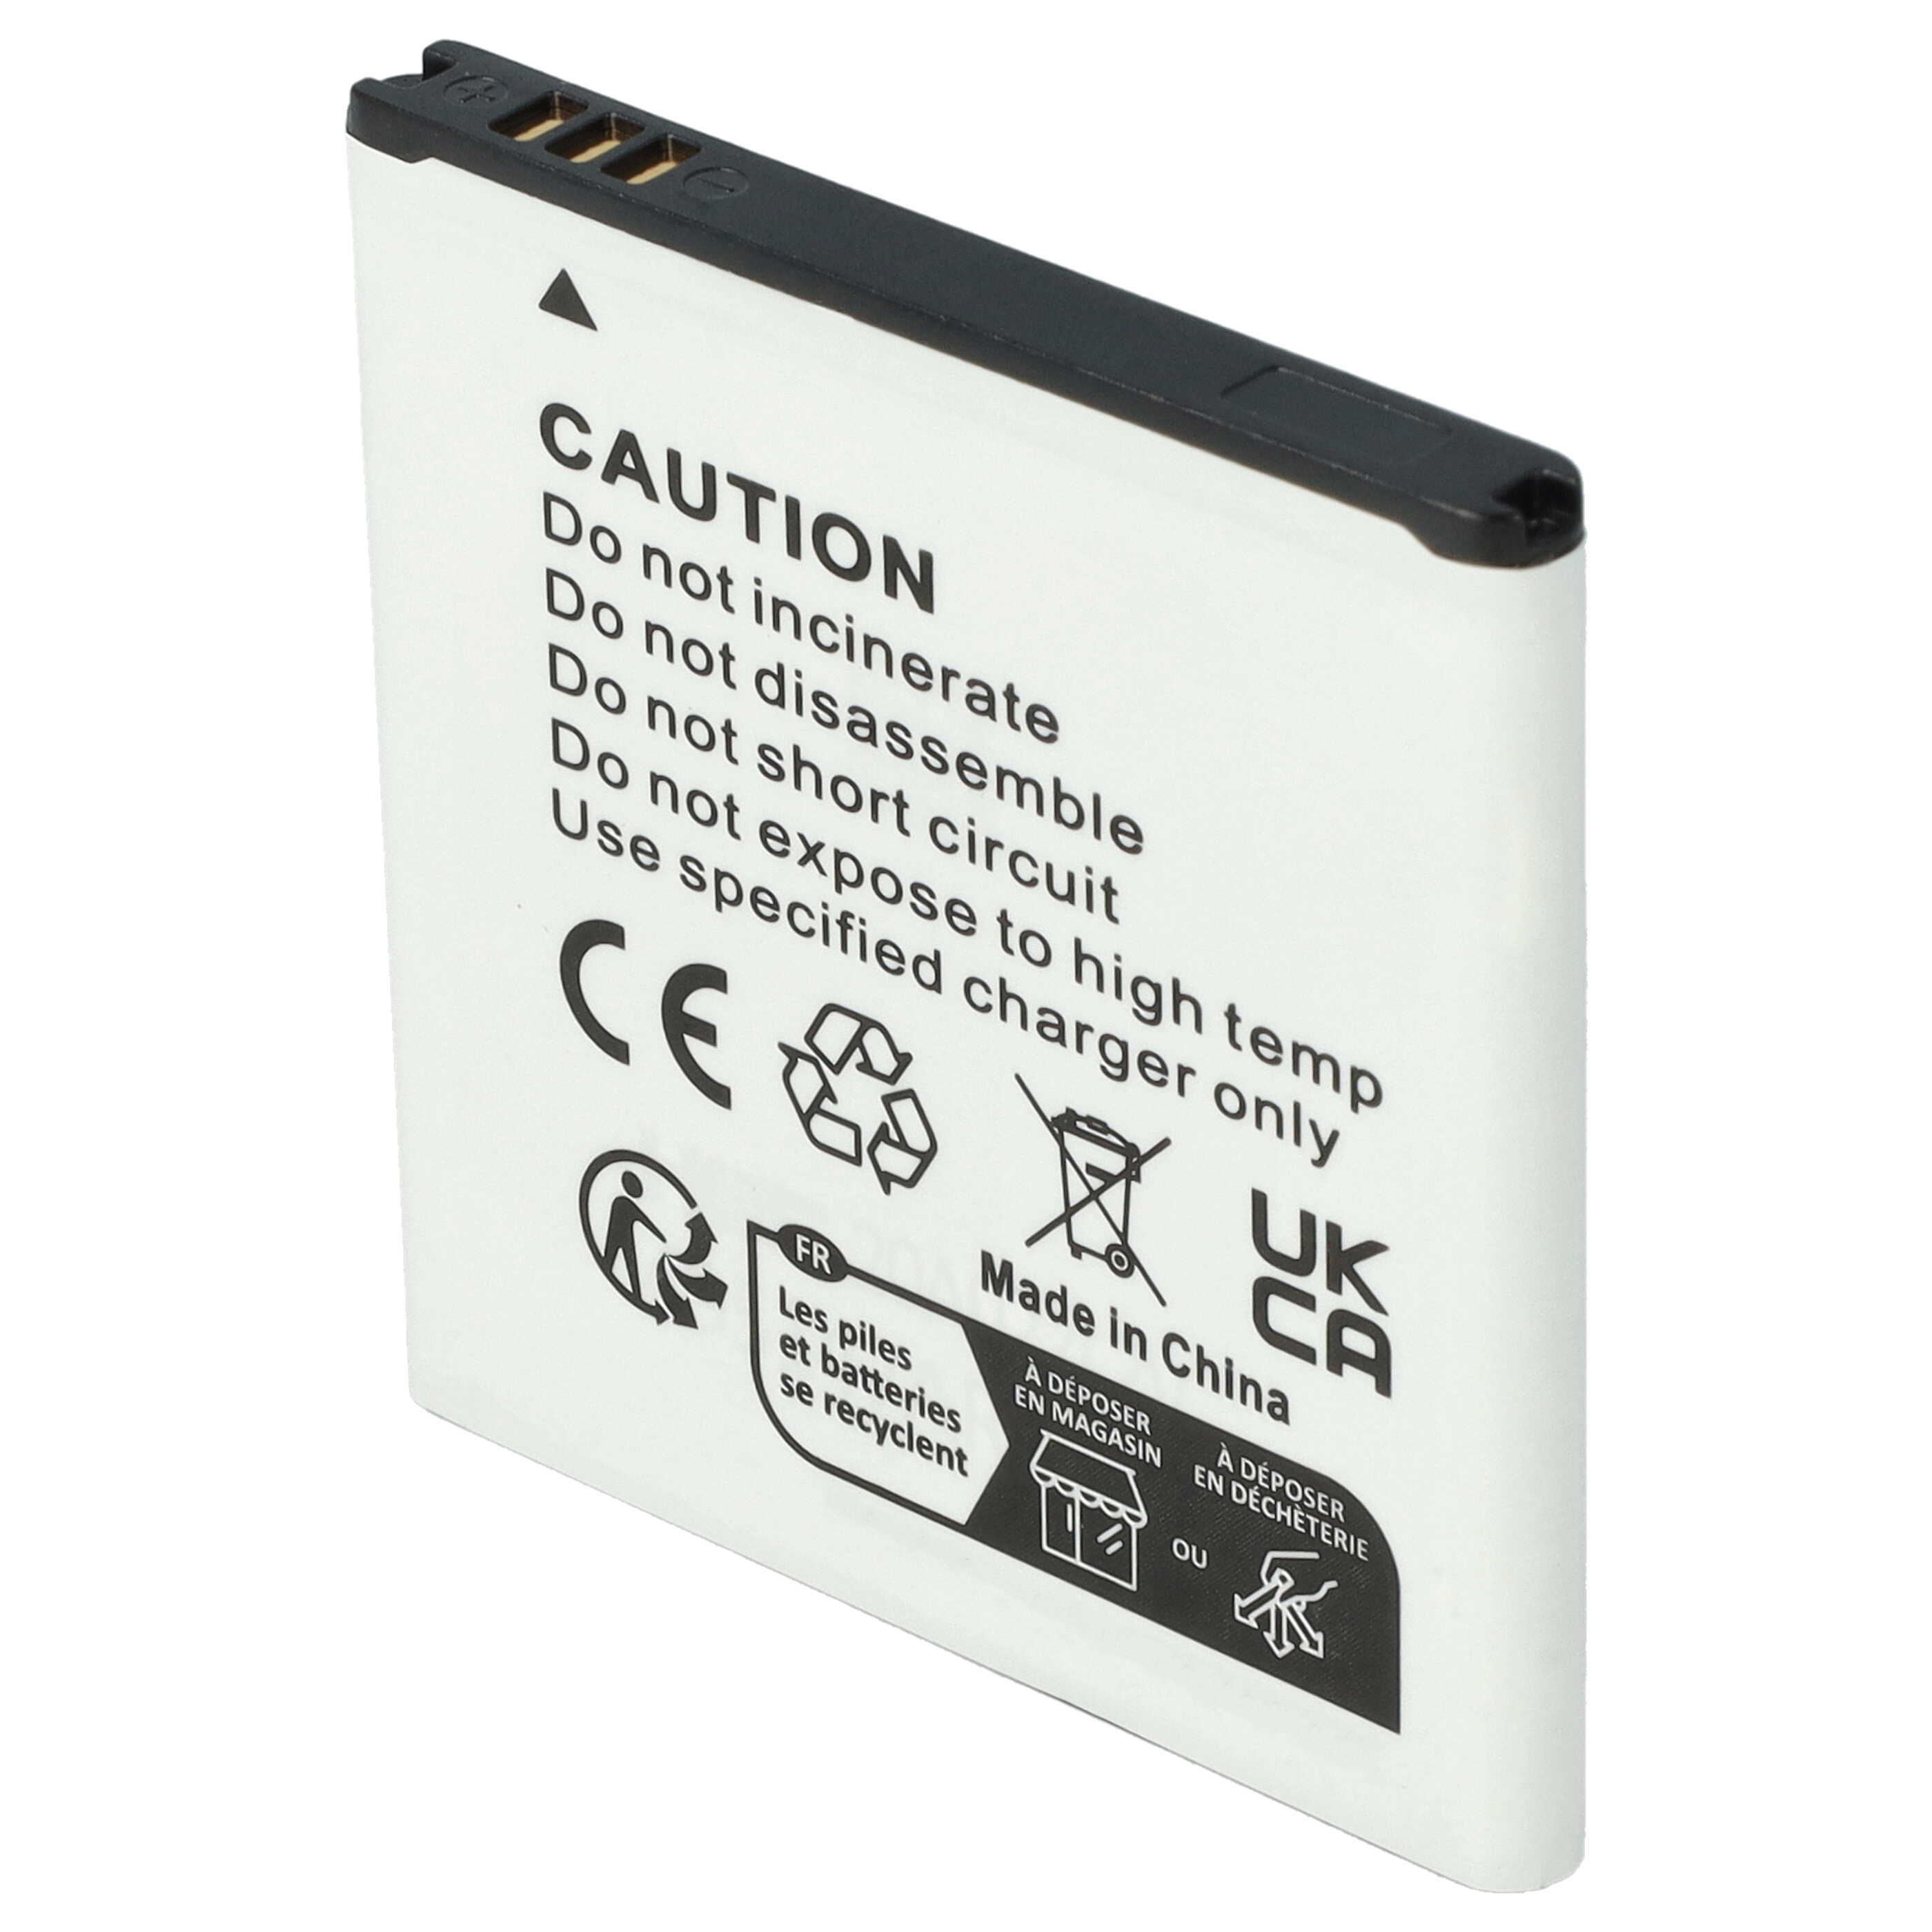 Akumulator Bateria zamiennik Samsung EB535151VU do komórki / smartfona - 1600mAh, 3,7V, Li-Ion